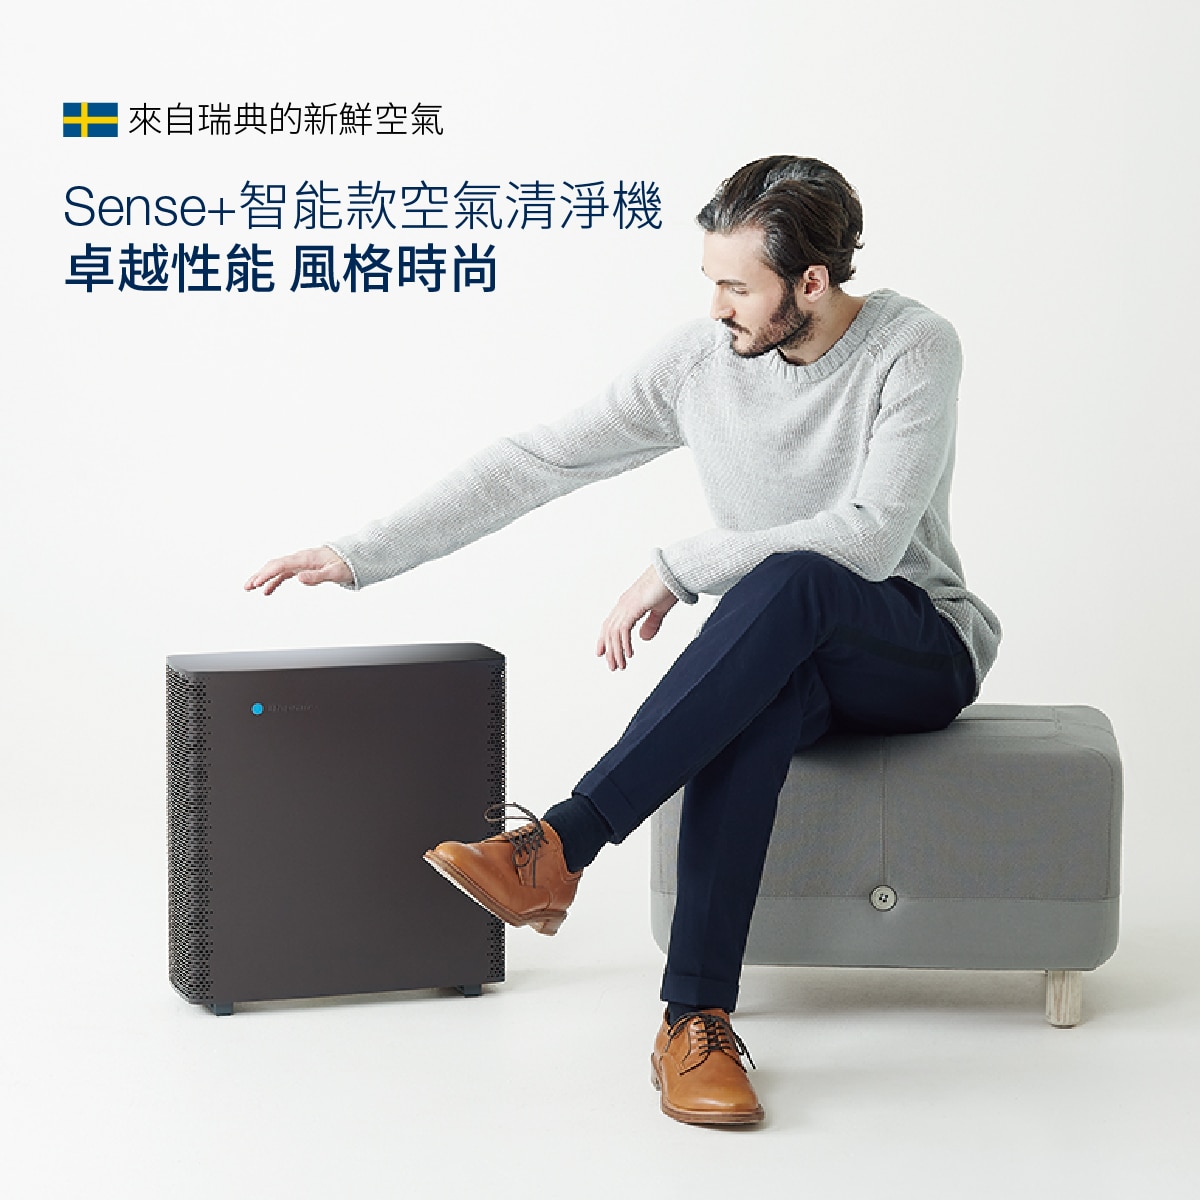 Sense+來自瑞典的智能款空氣清淨機,卓越性能,風格時尚。